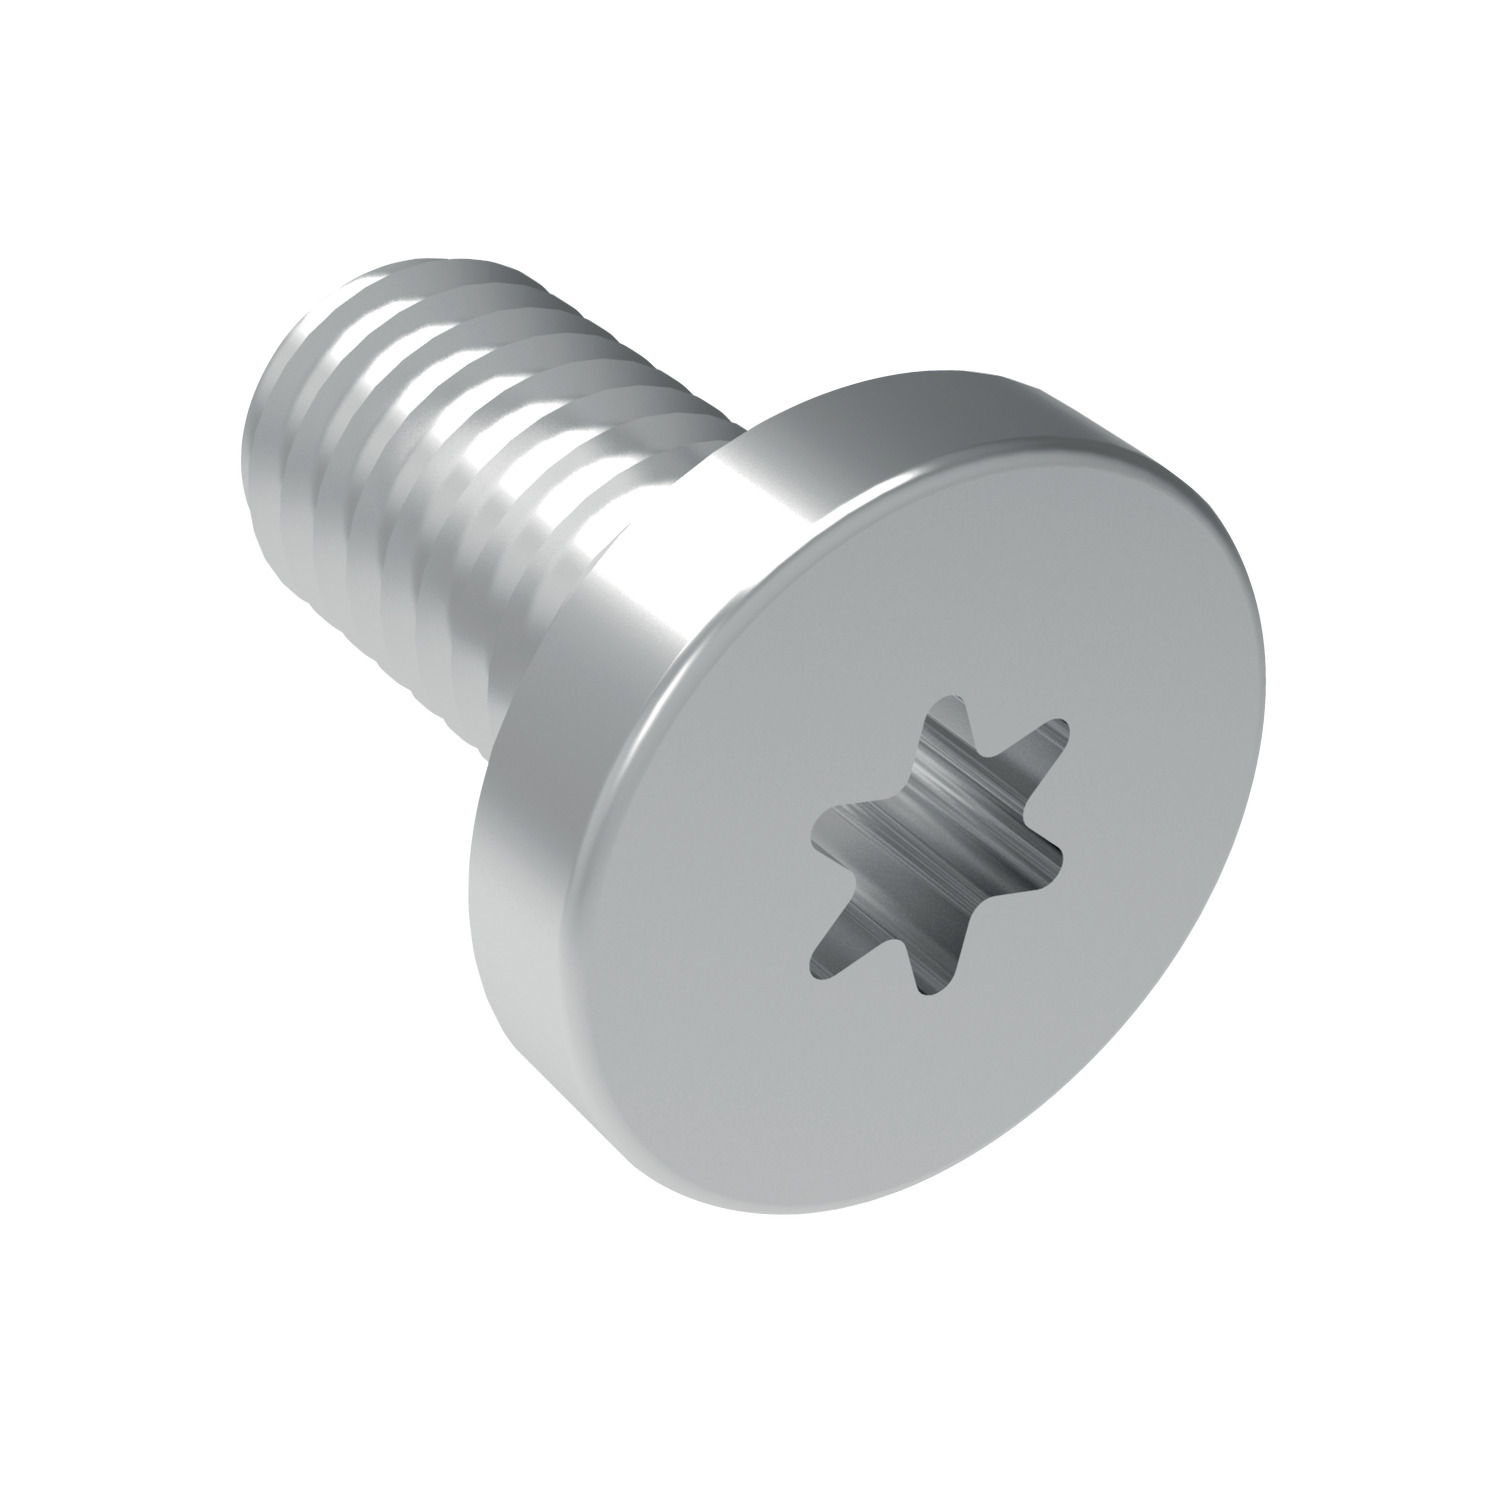 L1970.S - Fixing screws